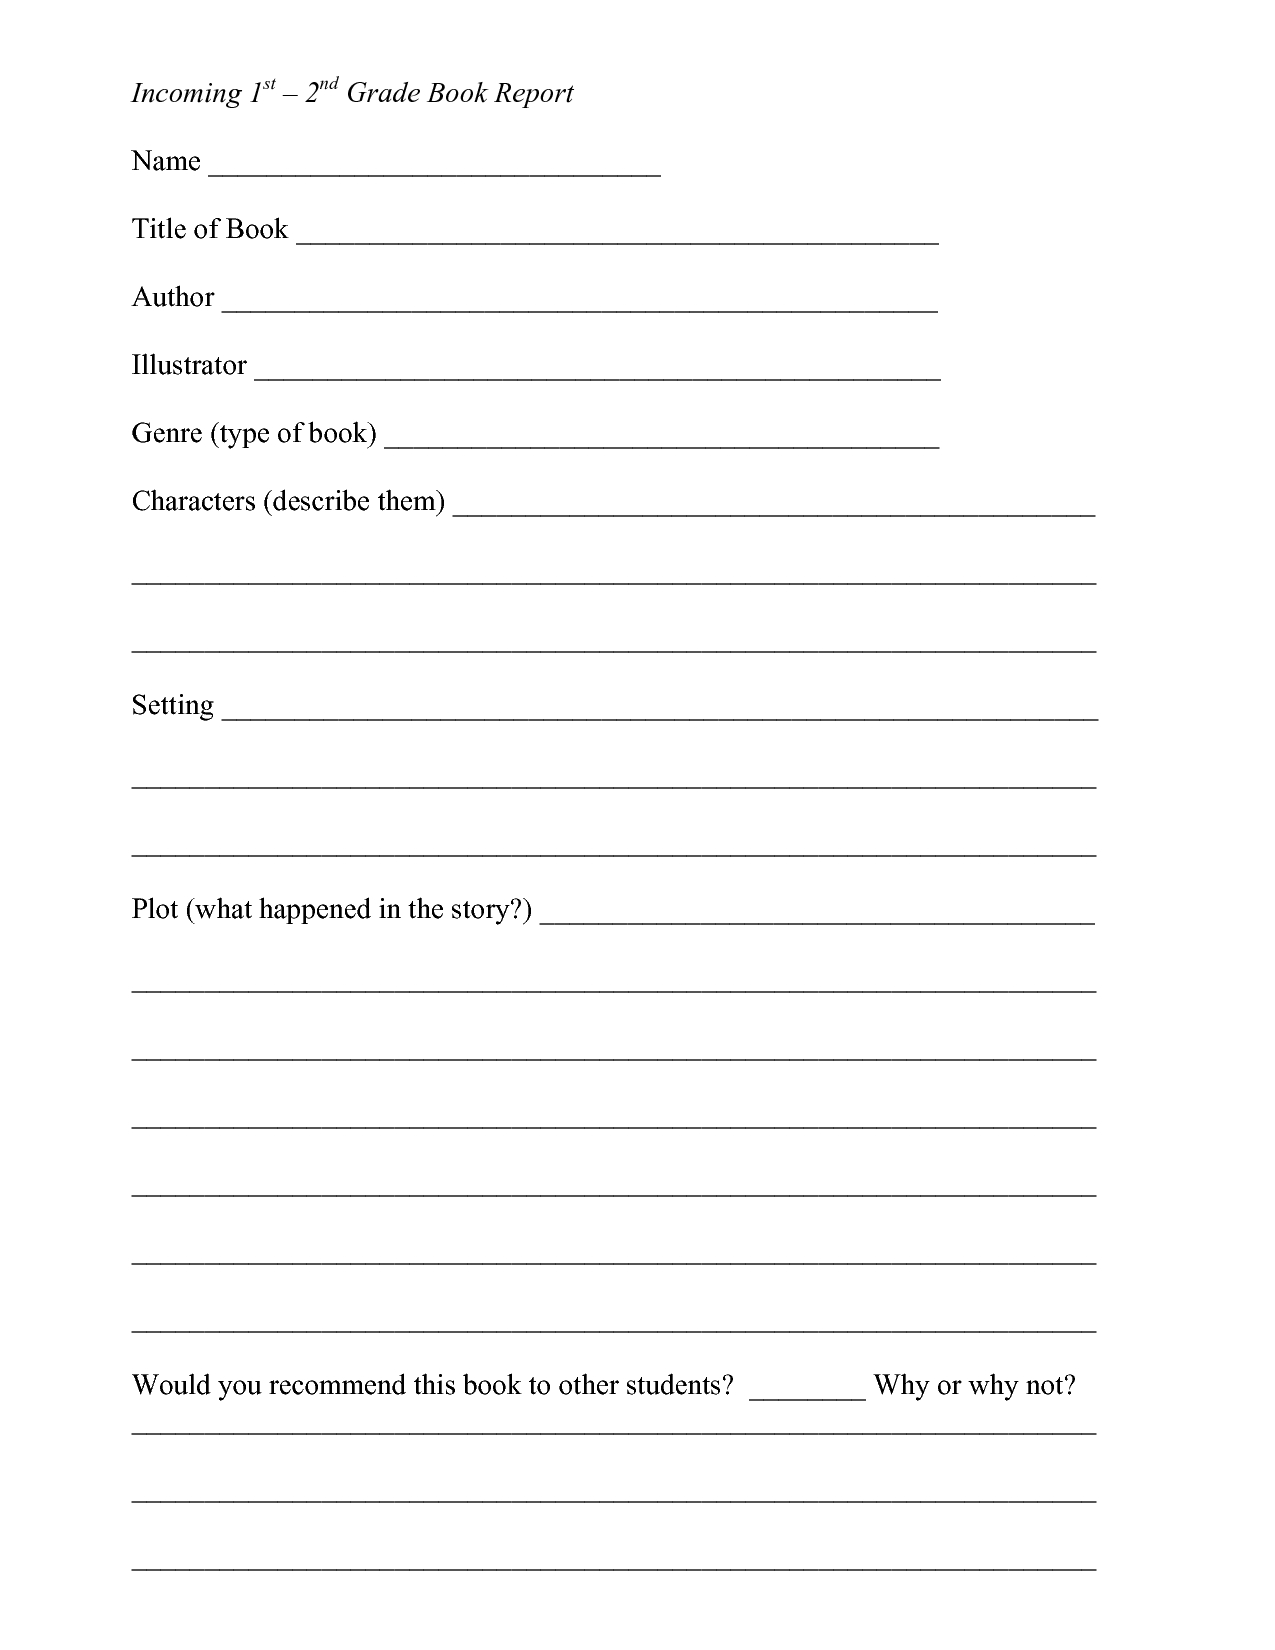 Book Report Template 2Nd Grade Free – Book Report Form For Book Report Template 3Rd Grade